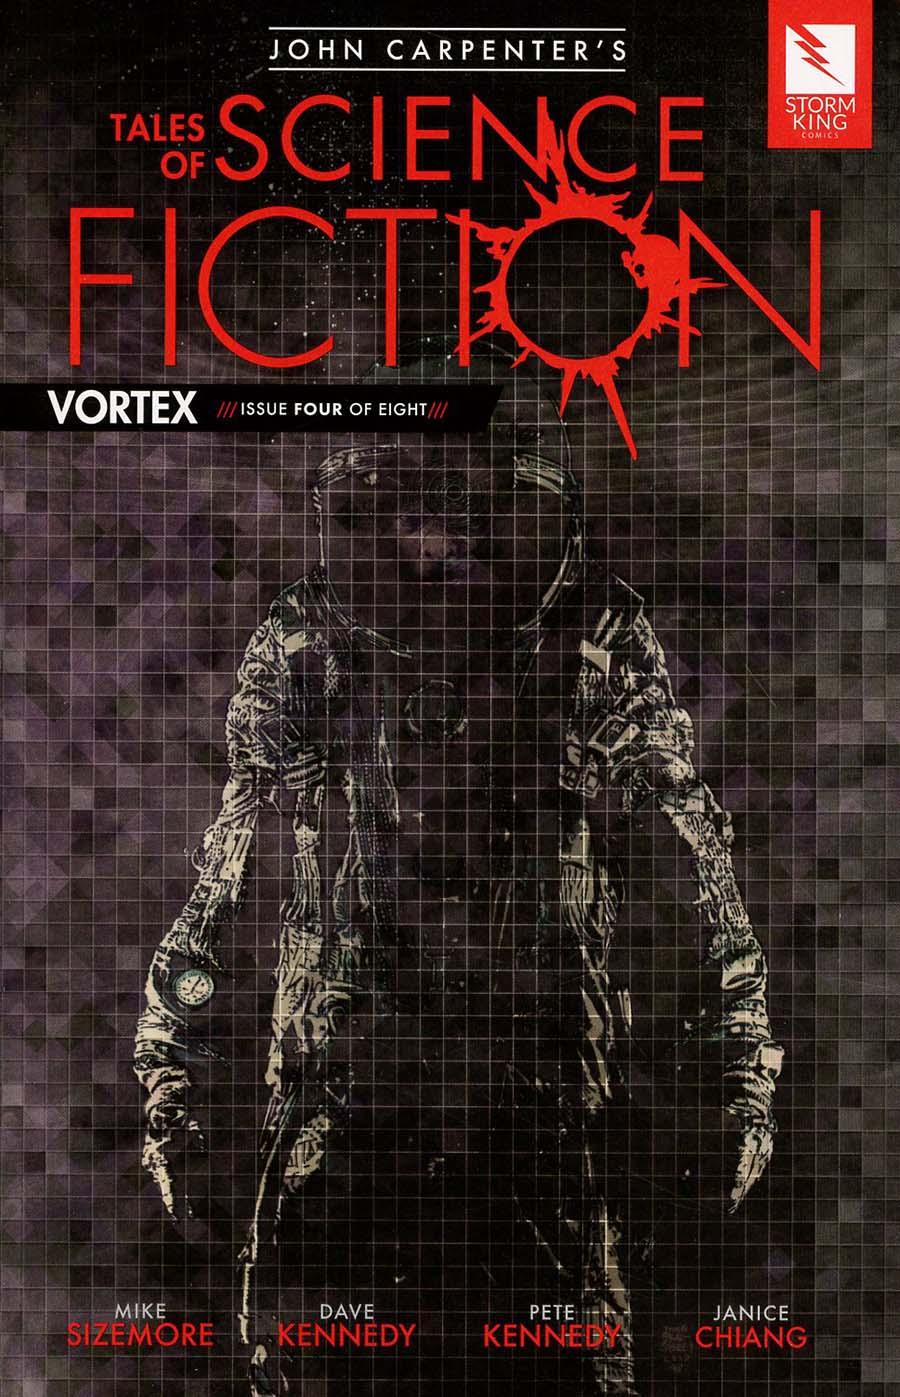 John Carpenters Tales Of Science Fiction Vortex Vol. 1 #4